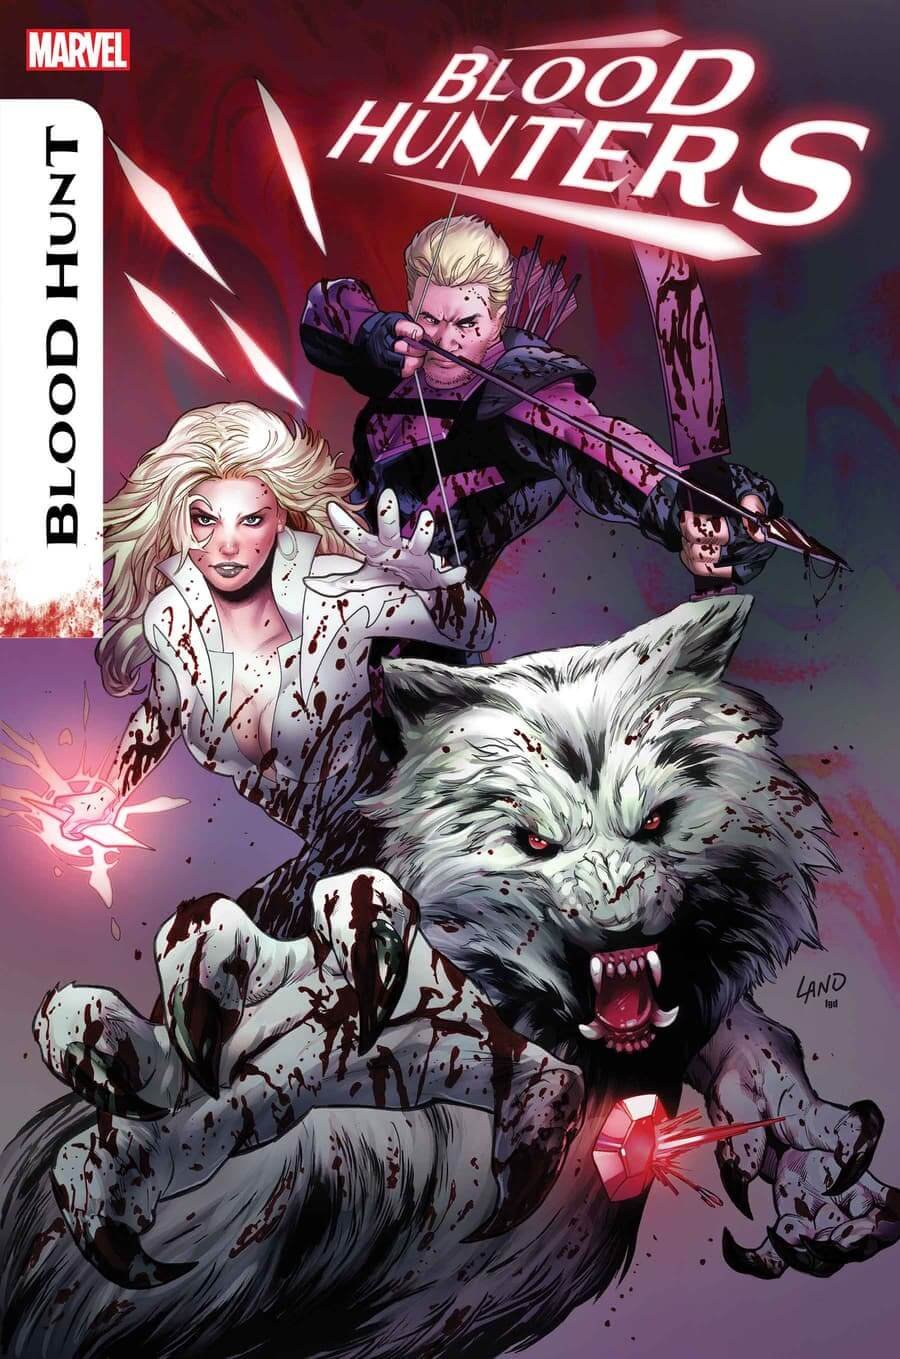 Cover di Blood Hunters 1 di Greg Land